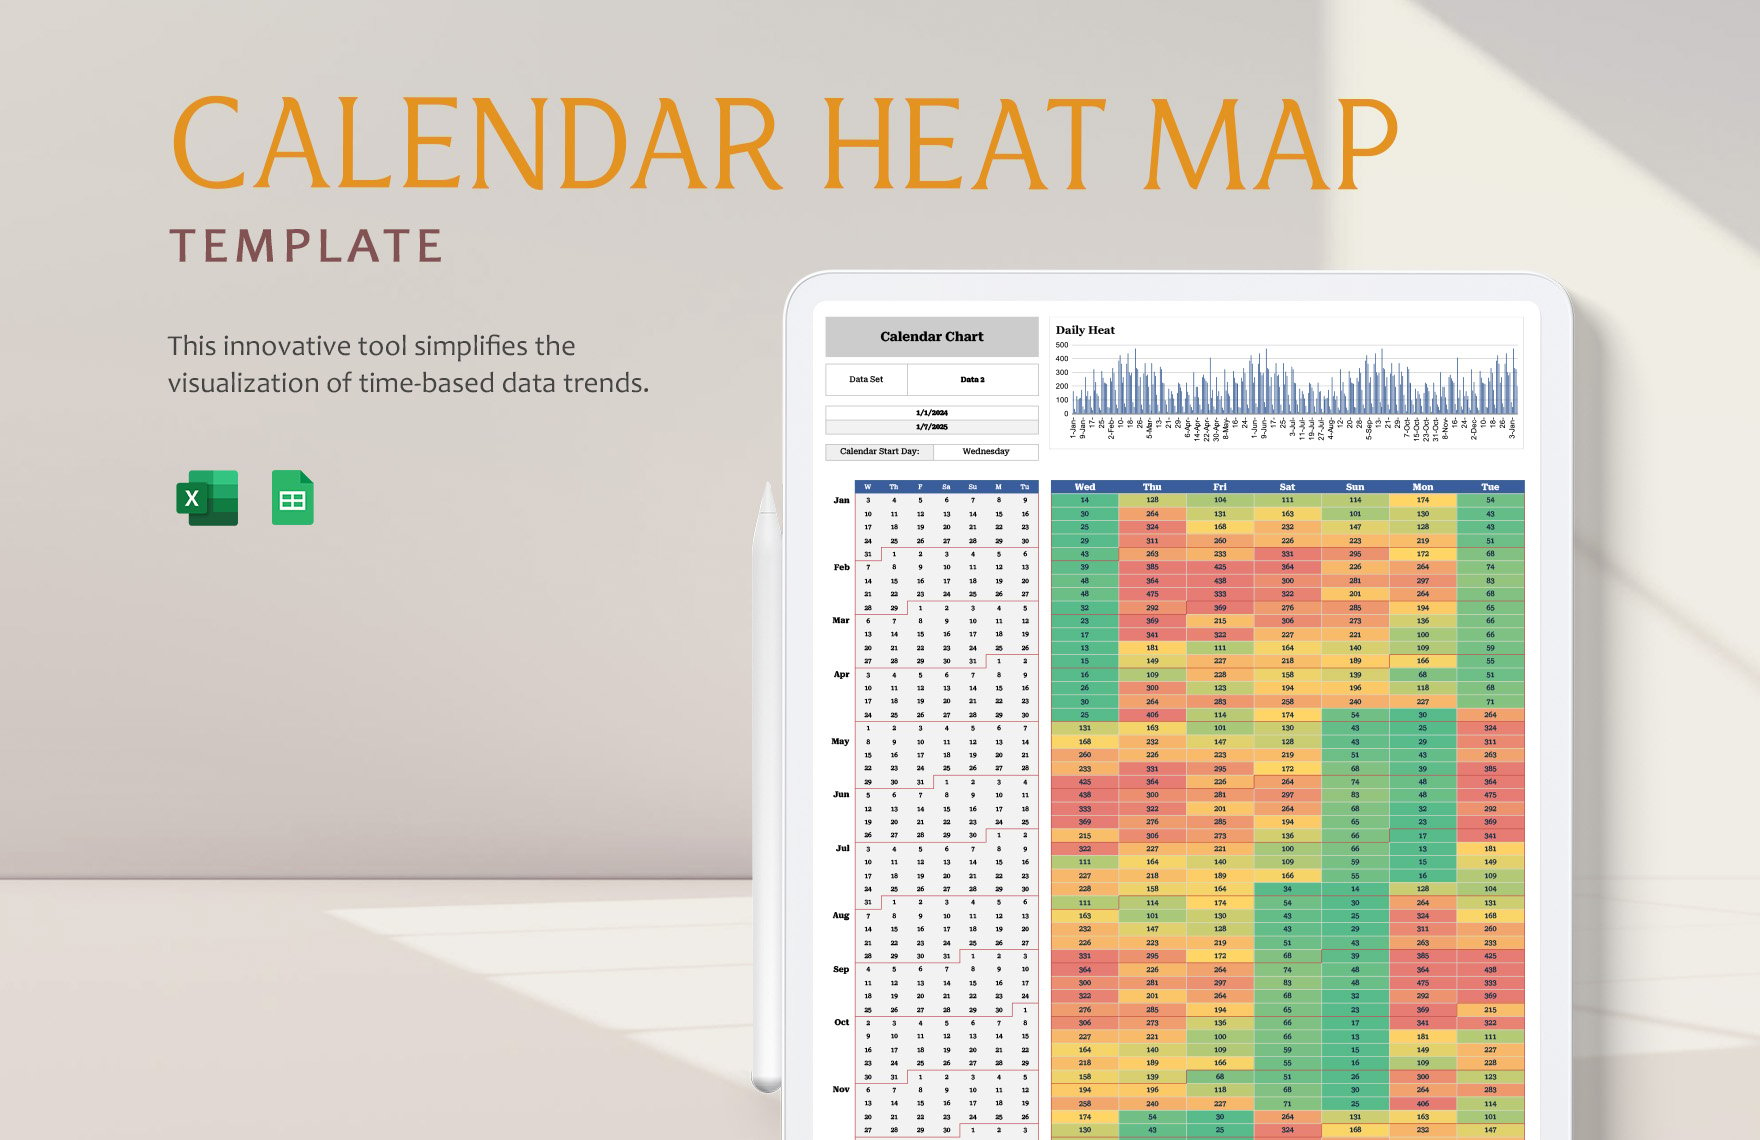 Calendar Heat Map Template in Excel, Google Sheets